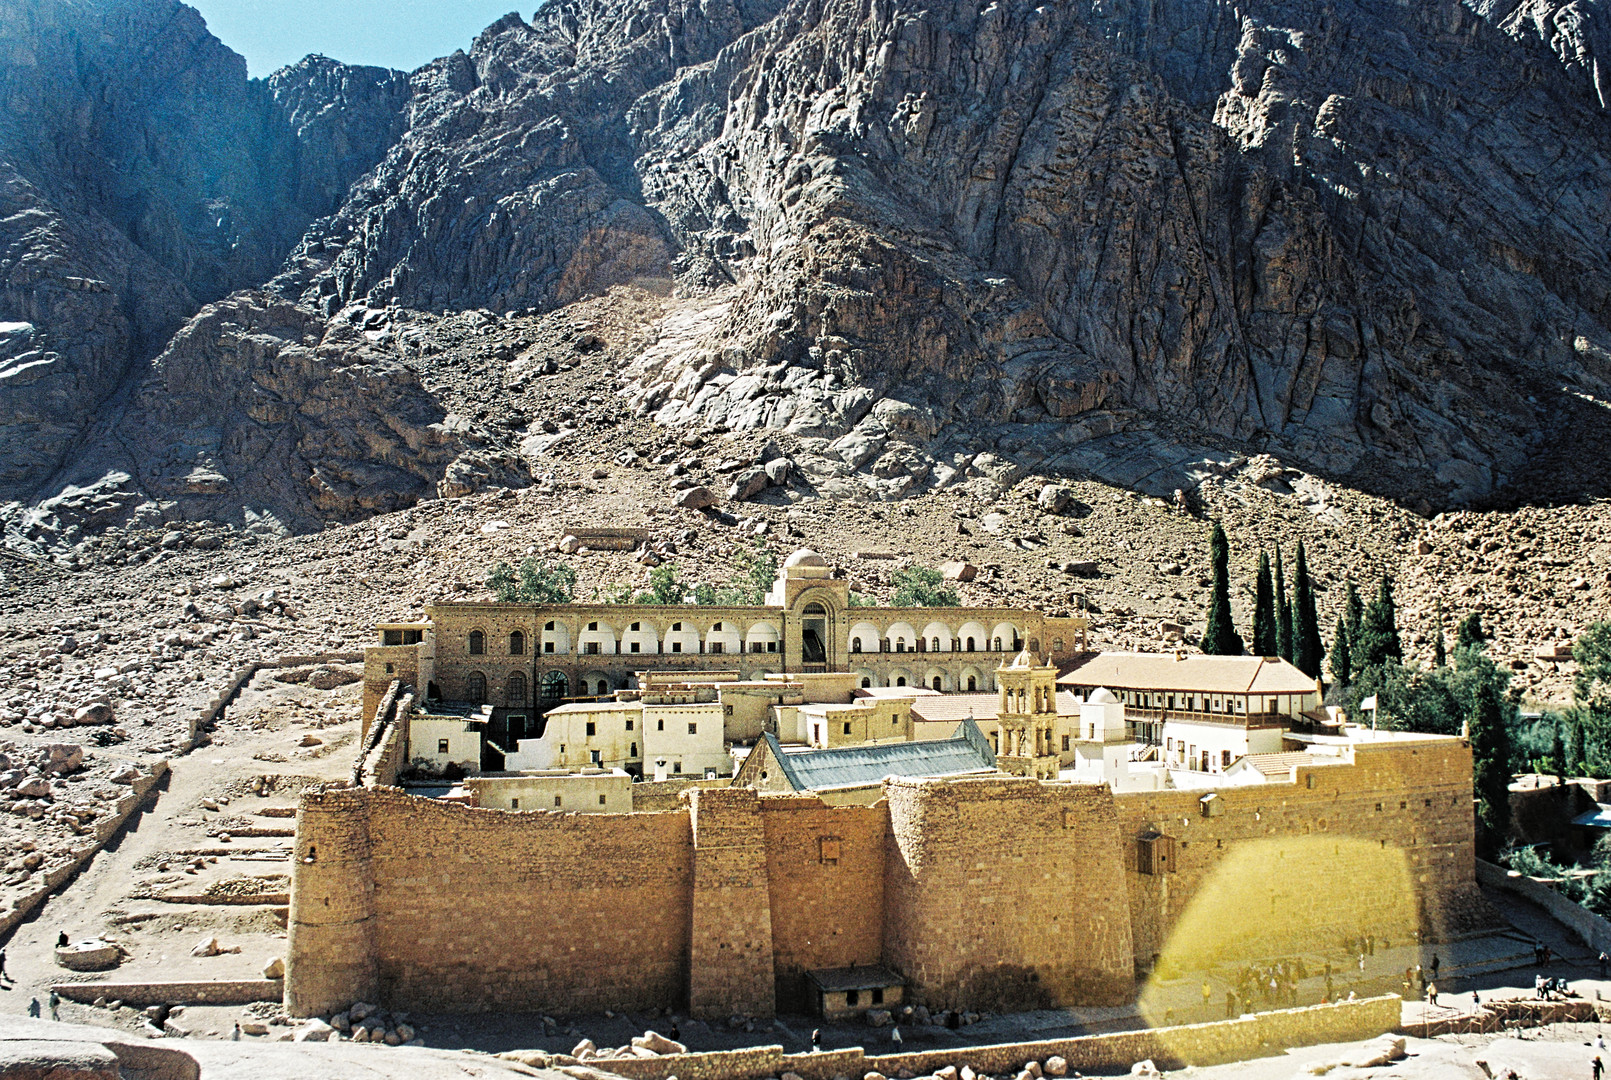 Katharinenkloster am Berg Sinai